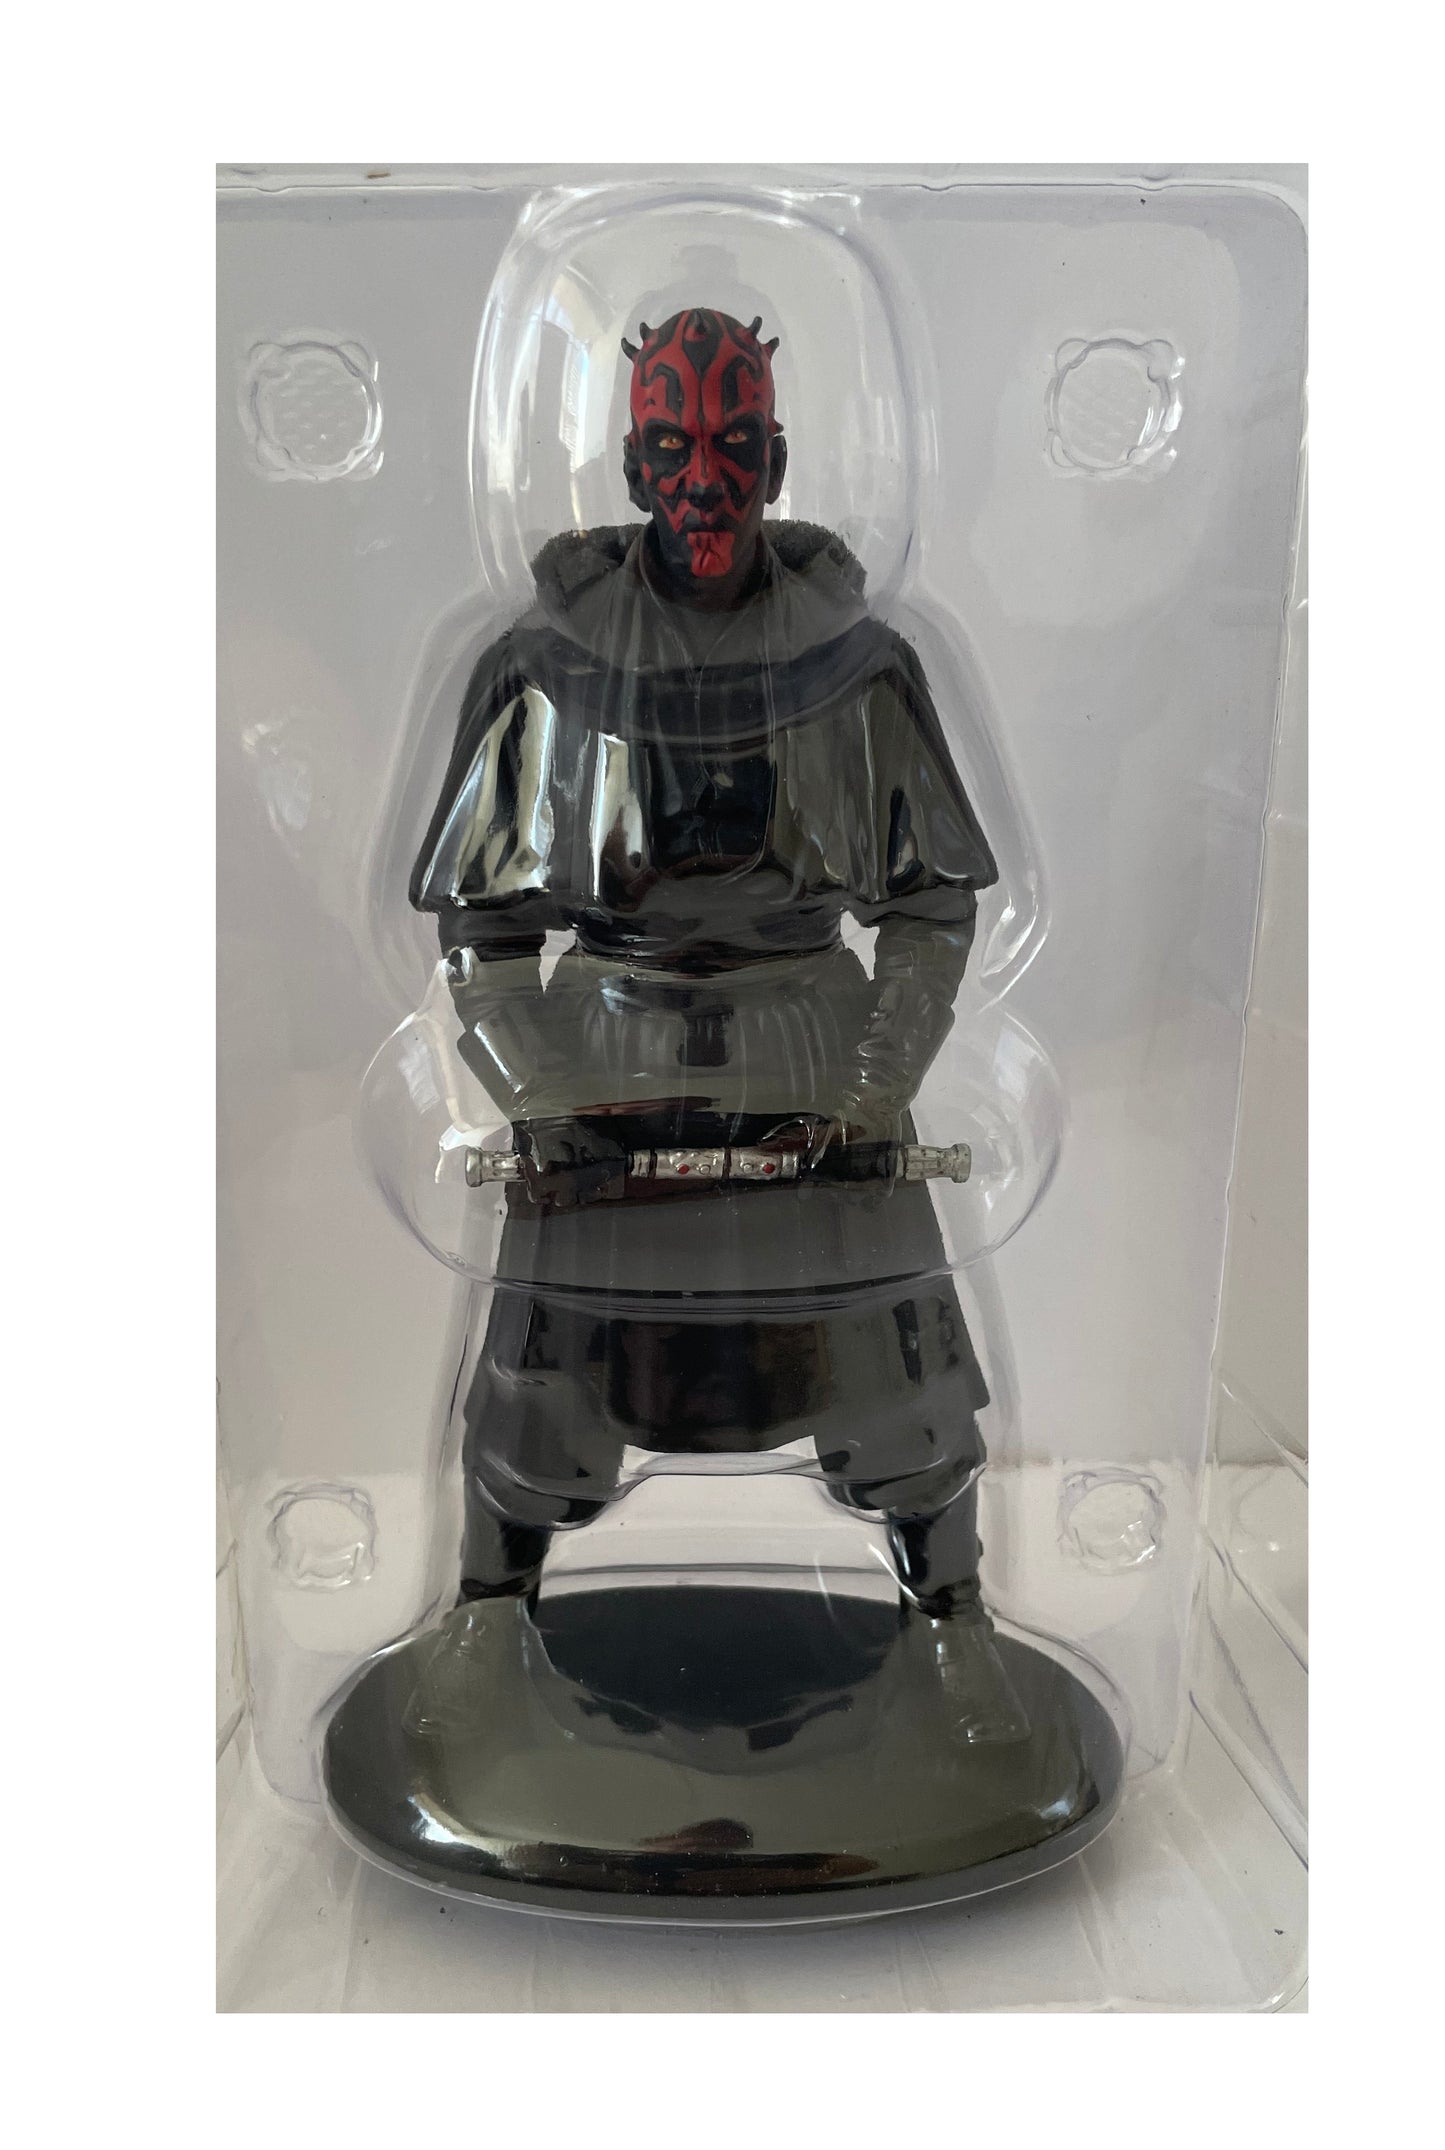 Vintage 2015 Star Wars The Phantom Menace Darth Maul 8 Inch Figurine - Highly Detailed Metal Cast Figure